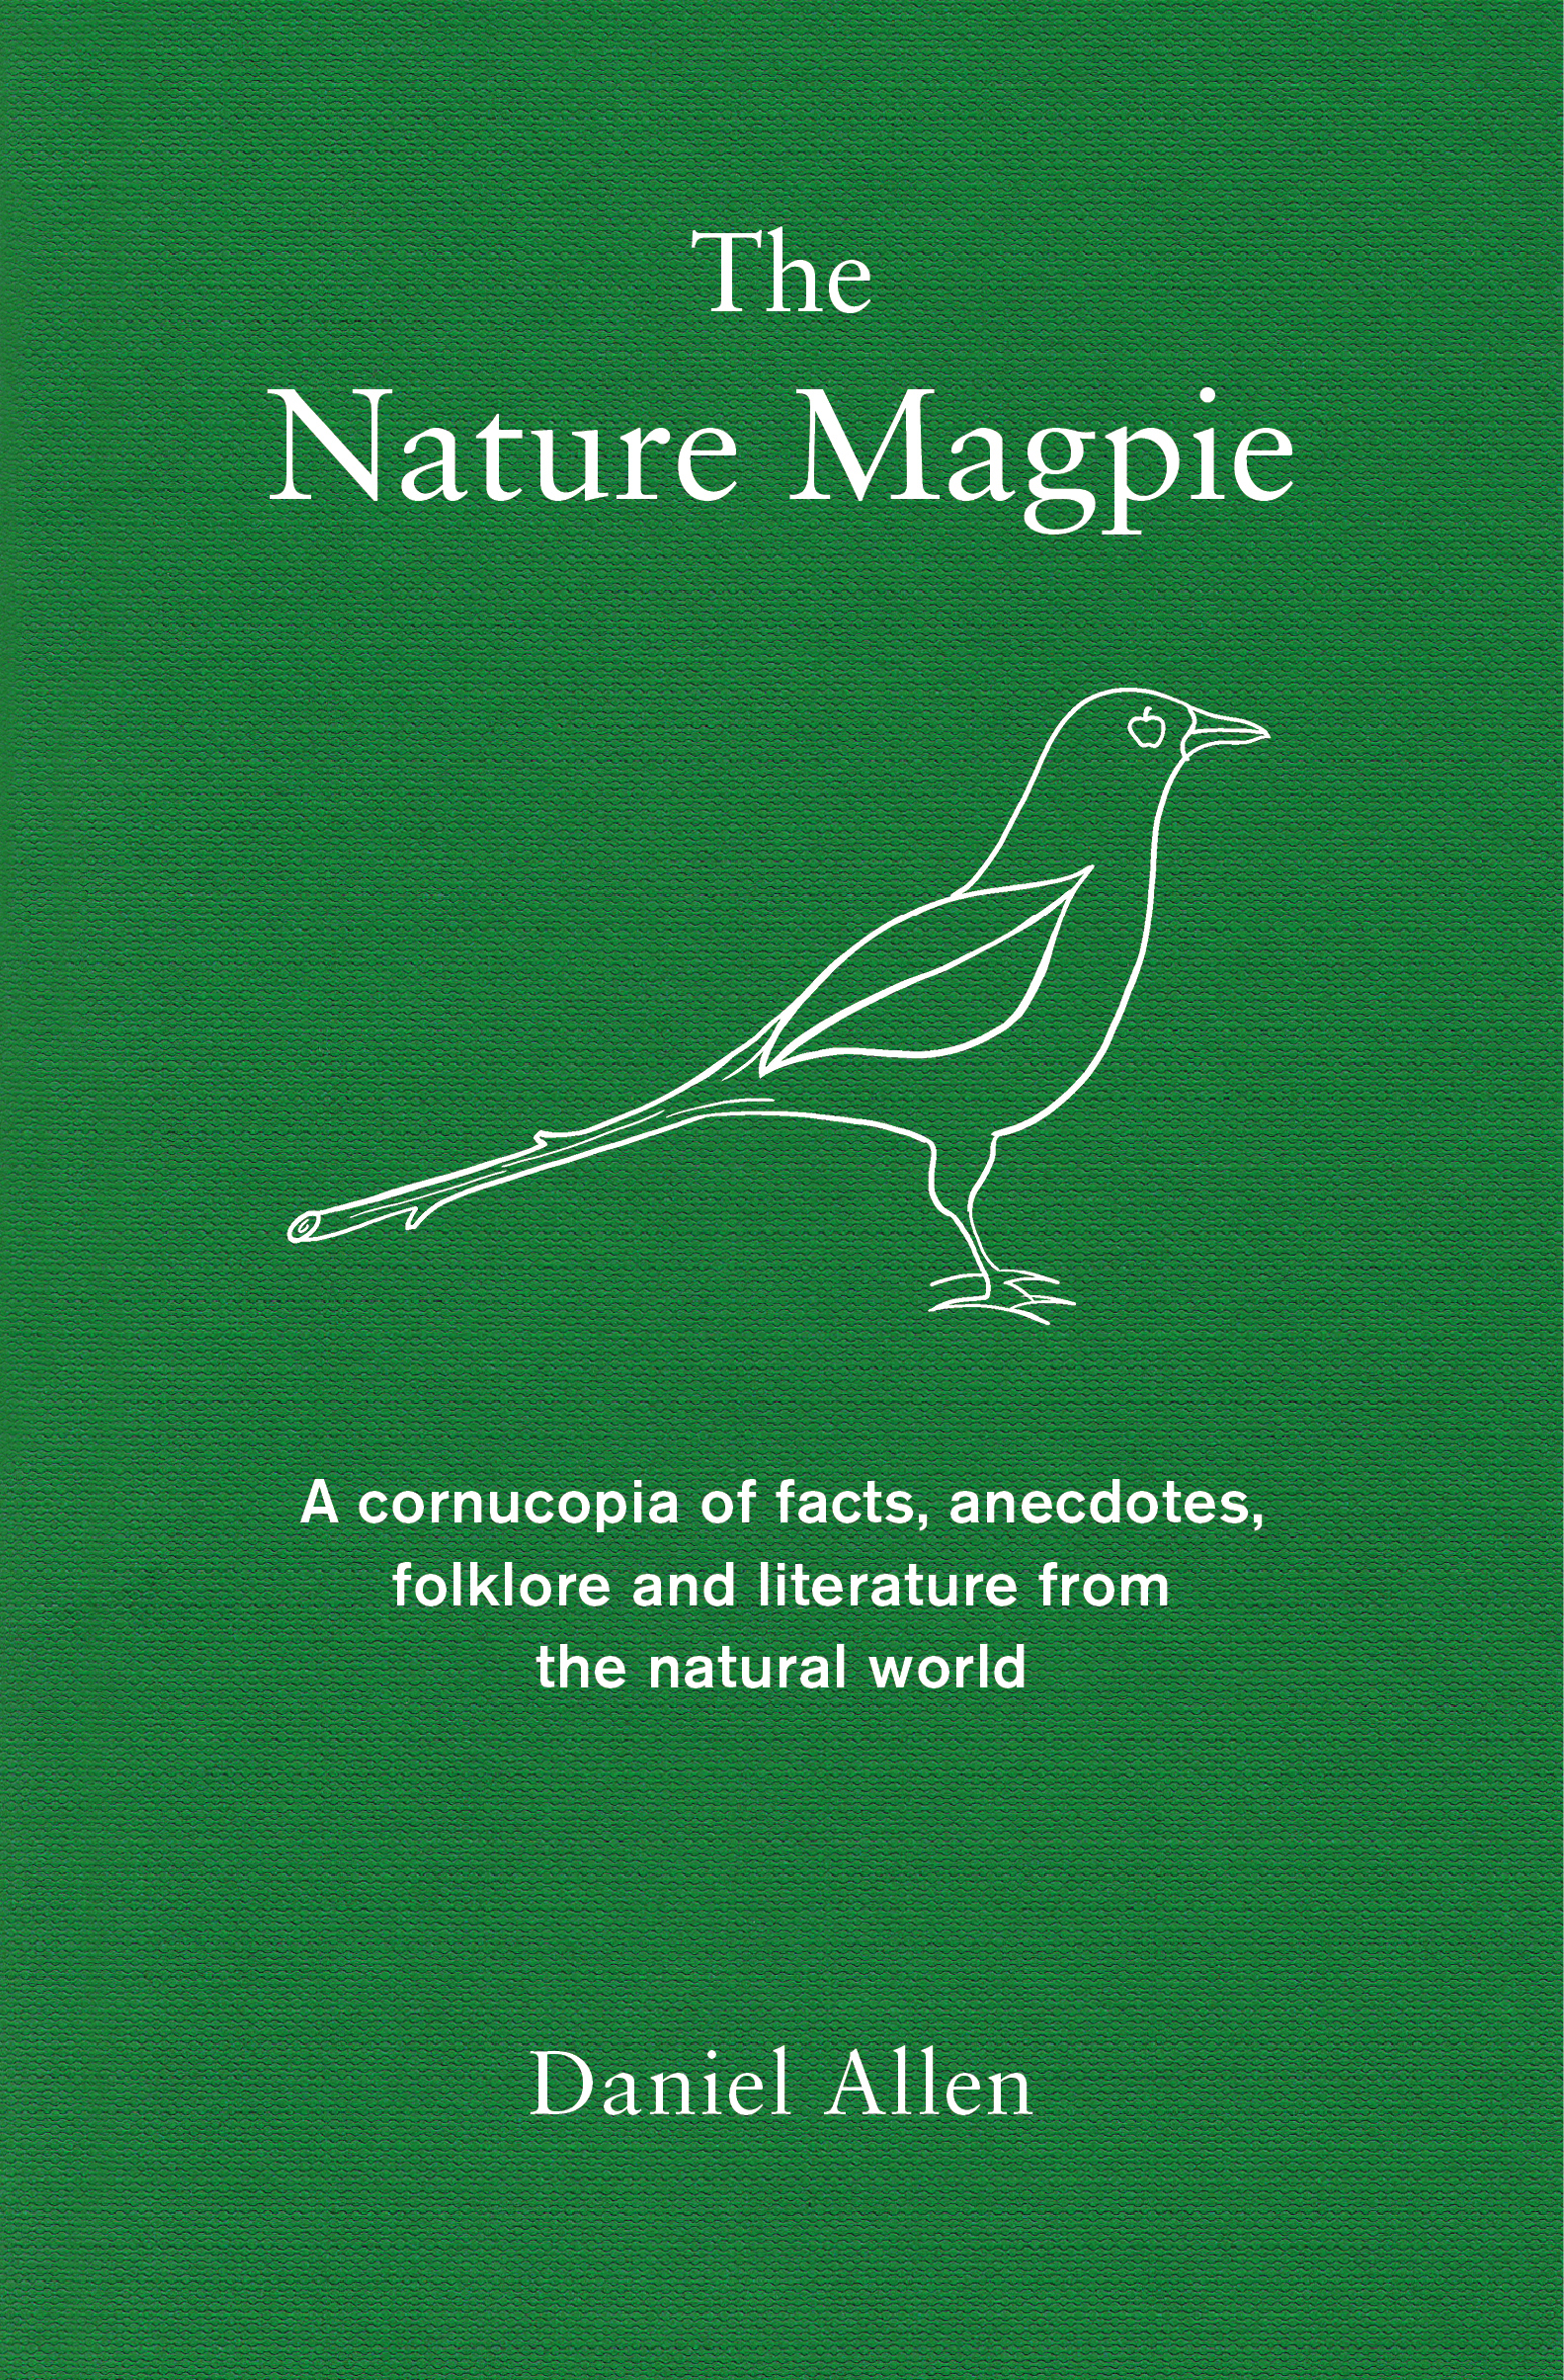 The Nature Magpie by Daniel Allen